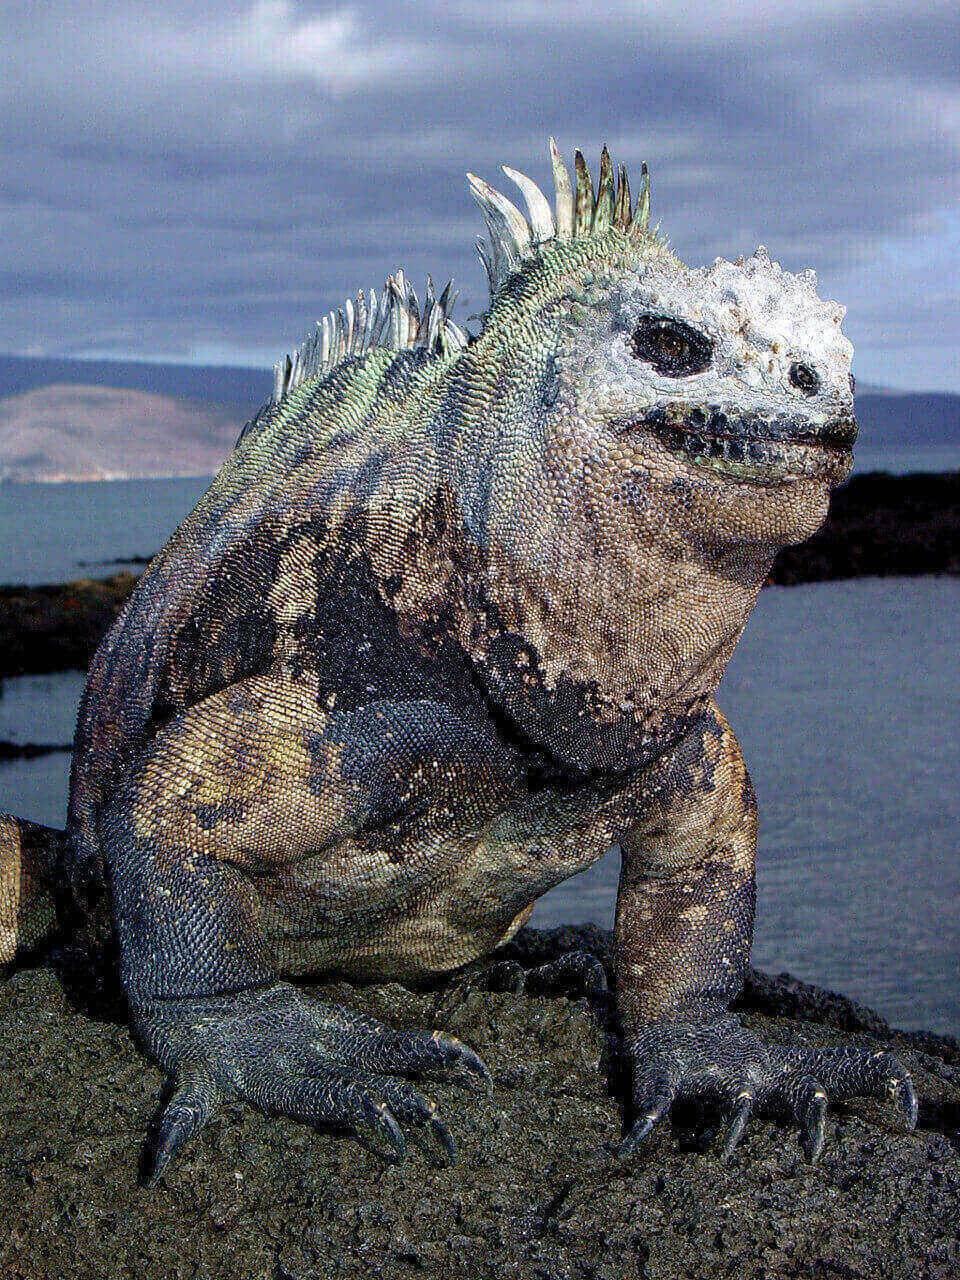 Marine Iguana From The Galapagos Islands